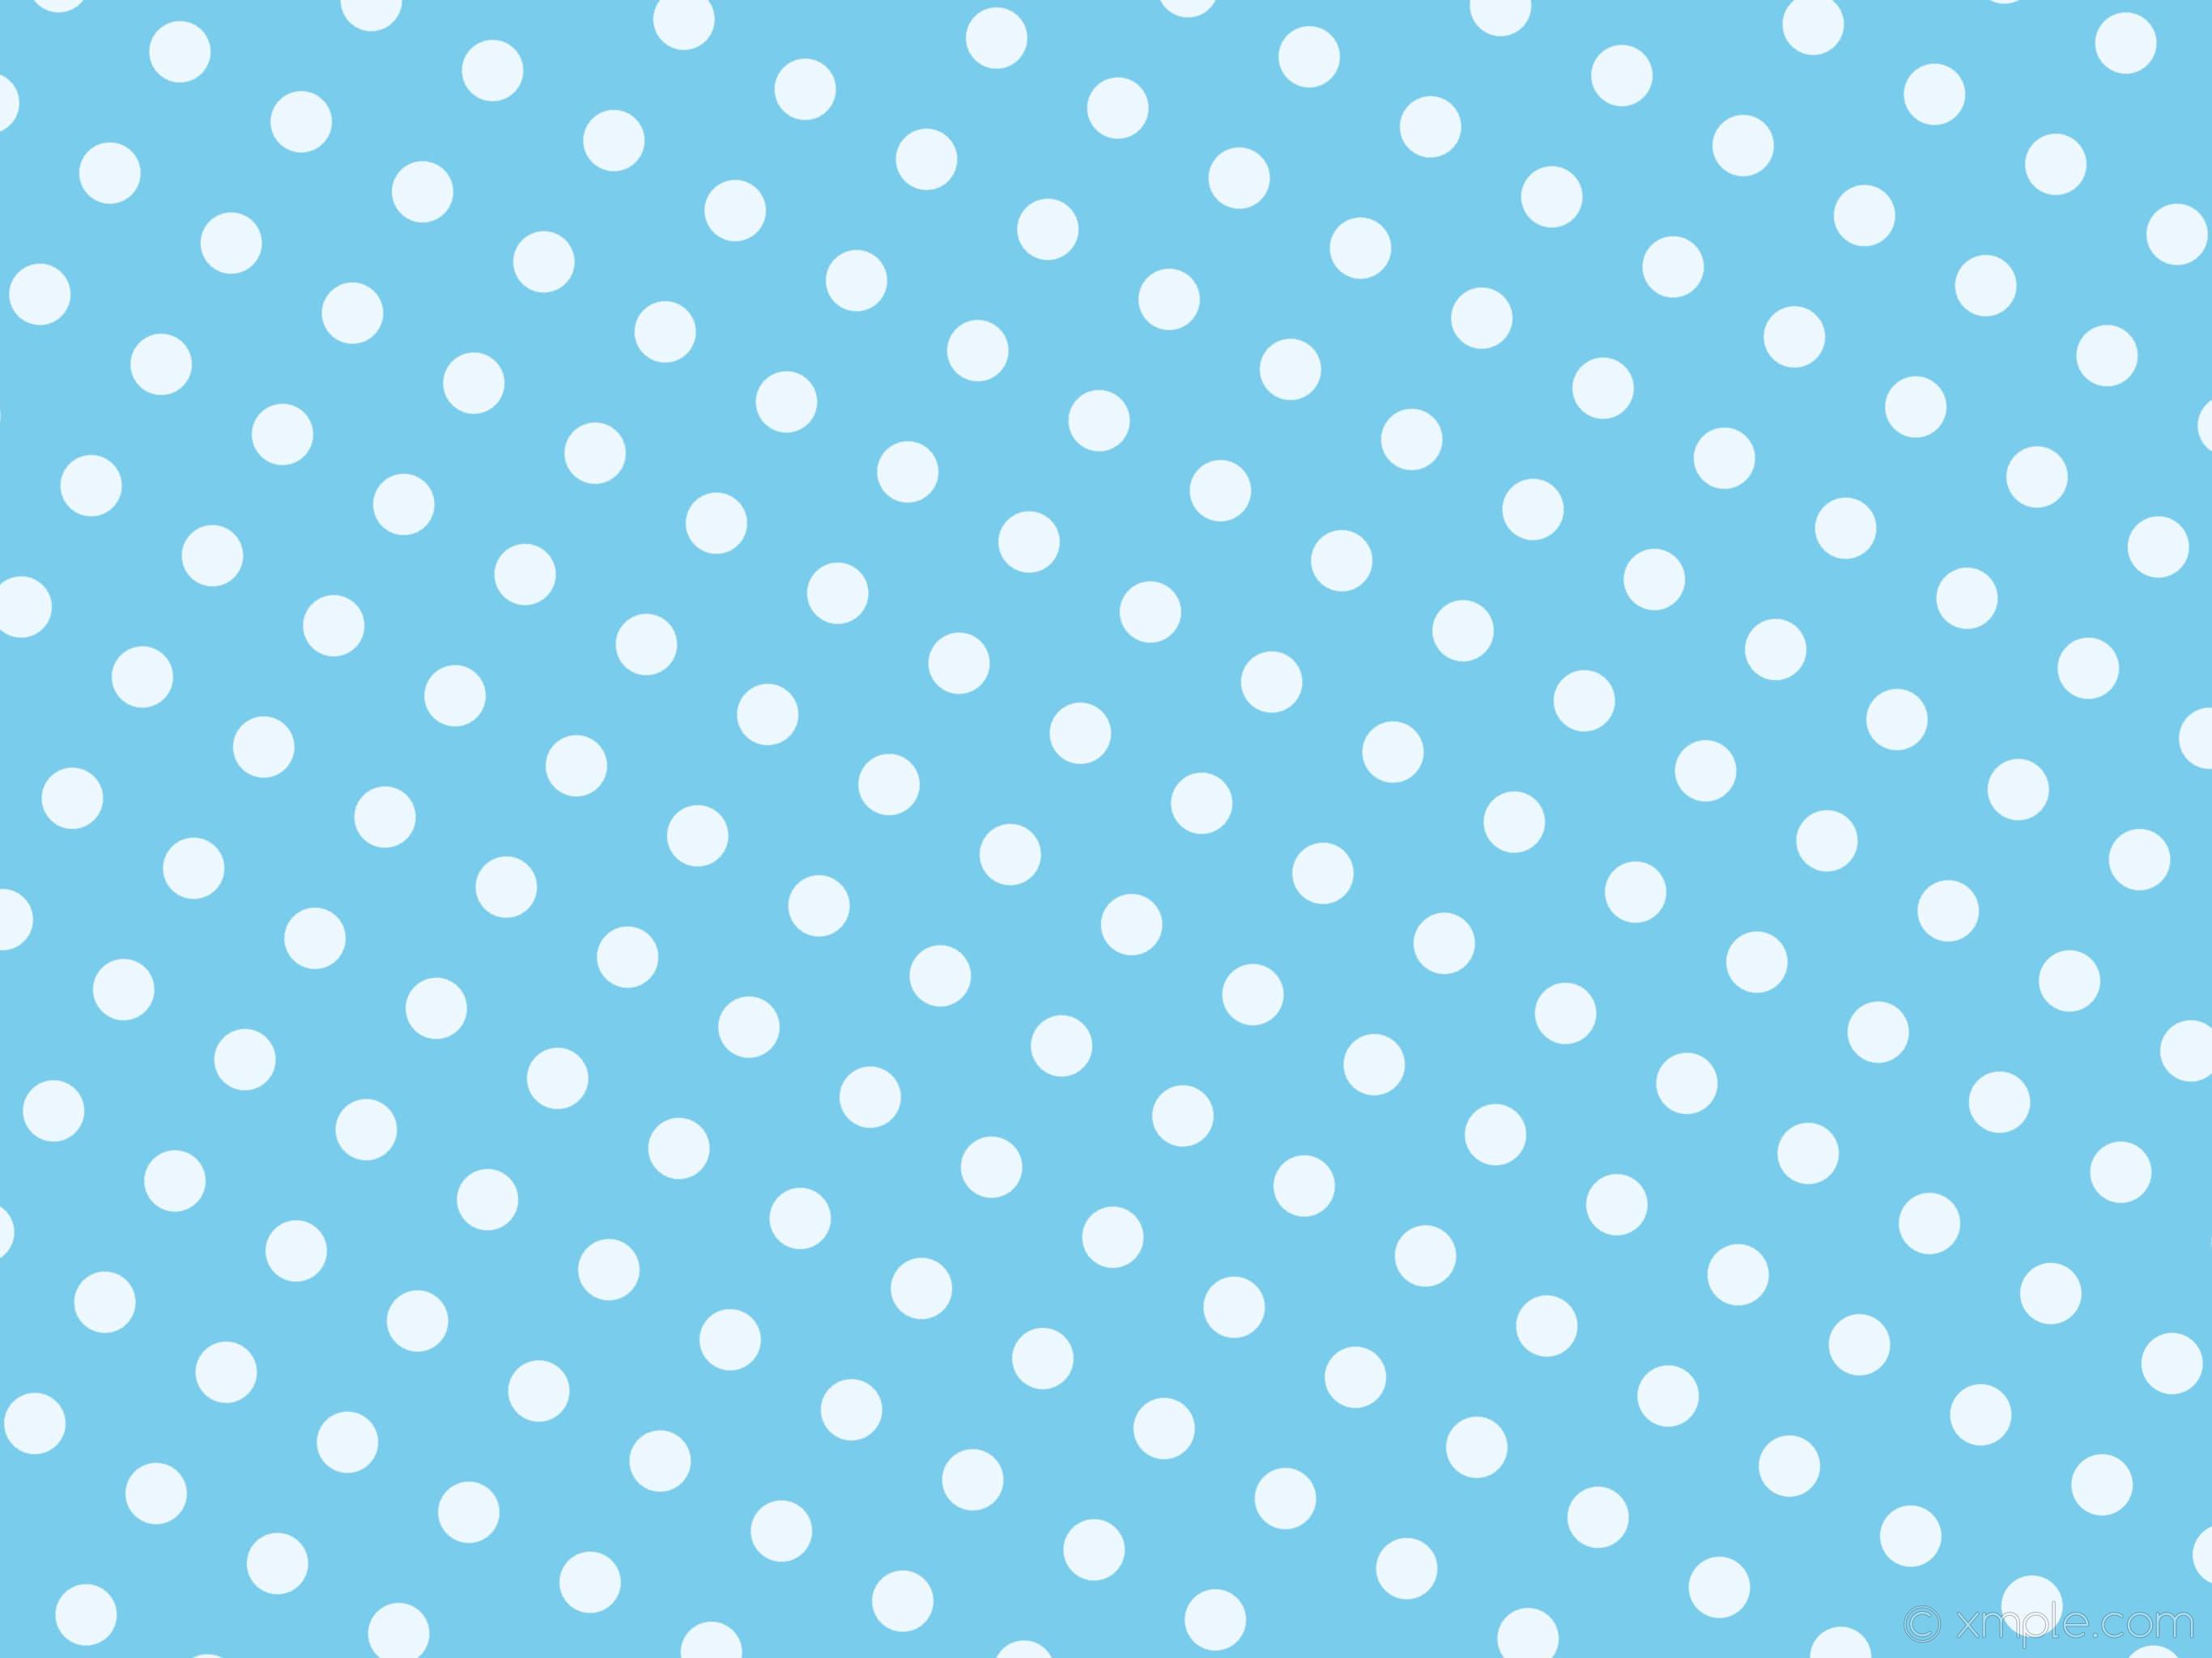 10. Blue and White Polka Dot Nail Art - wide 3